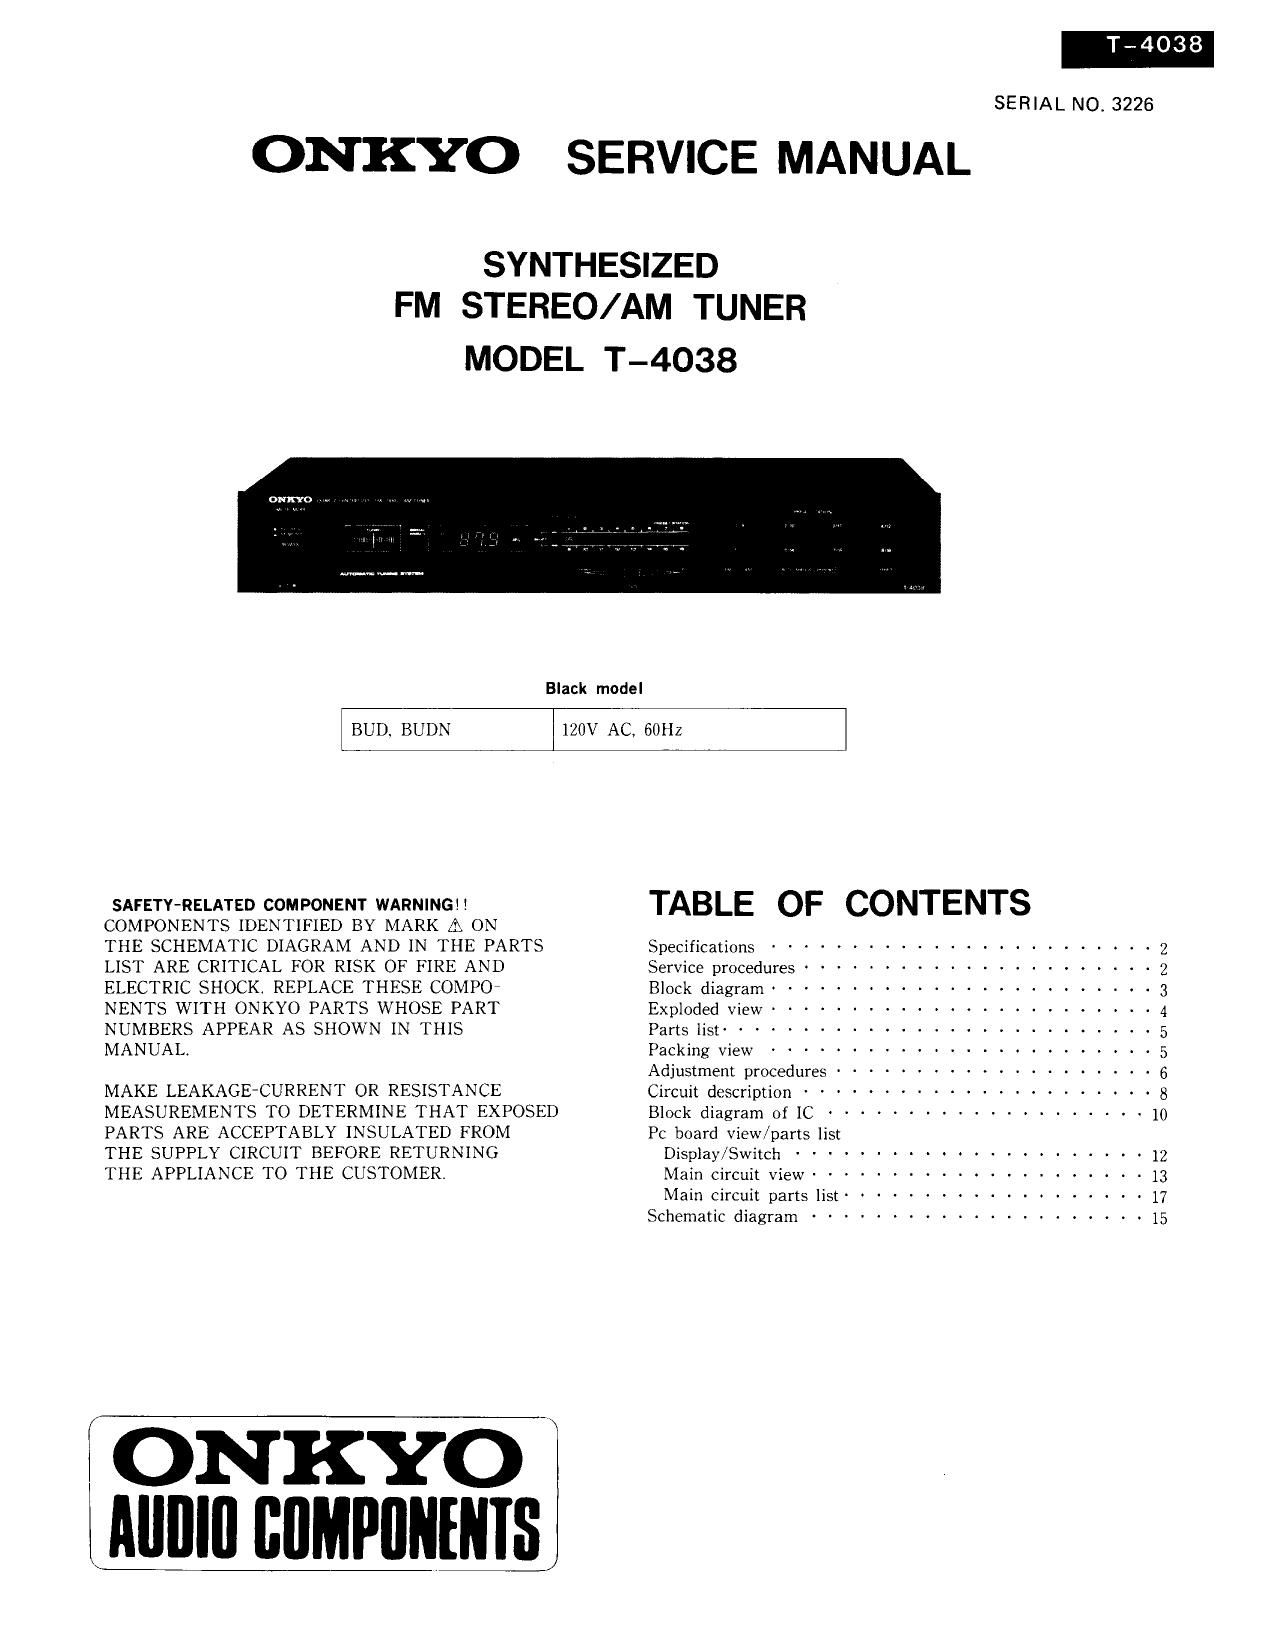 Onkyo T 4038 Service Manual